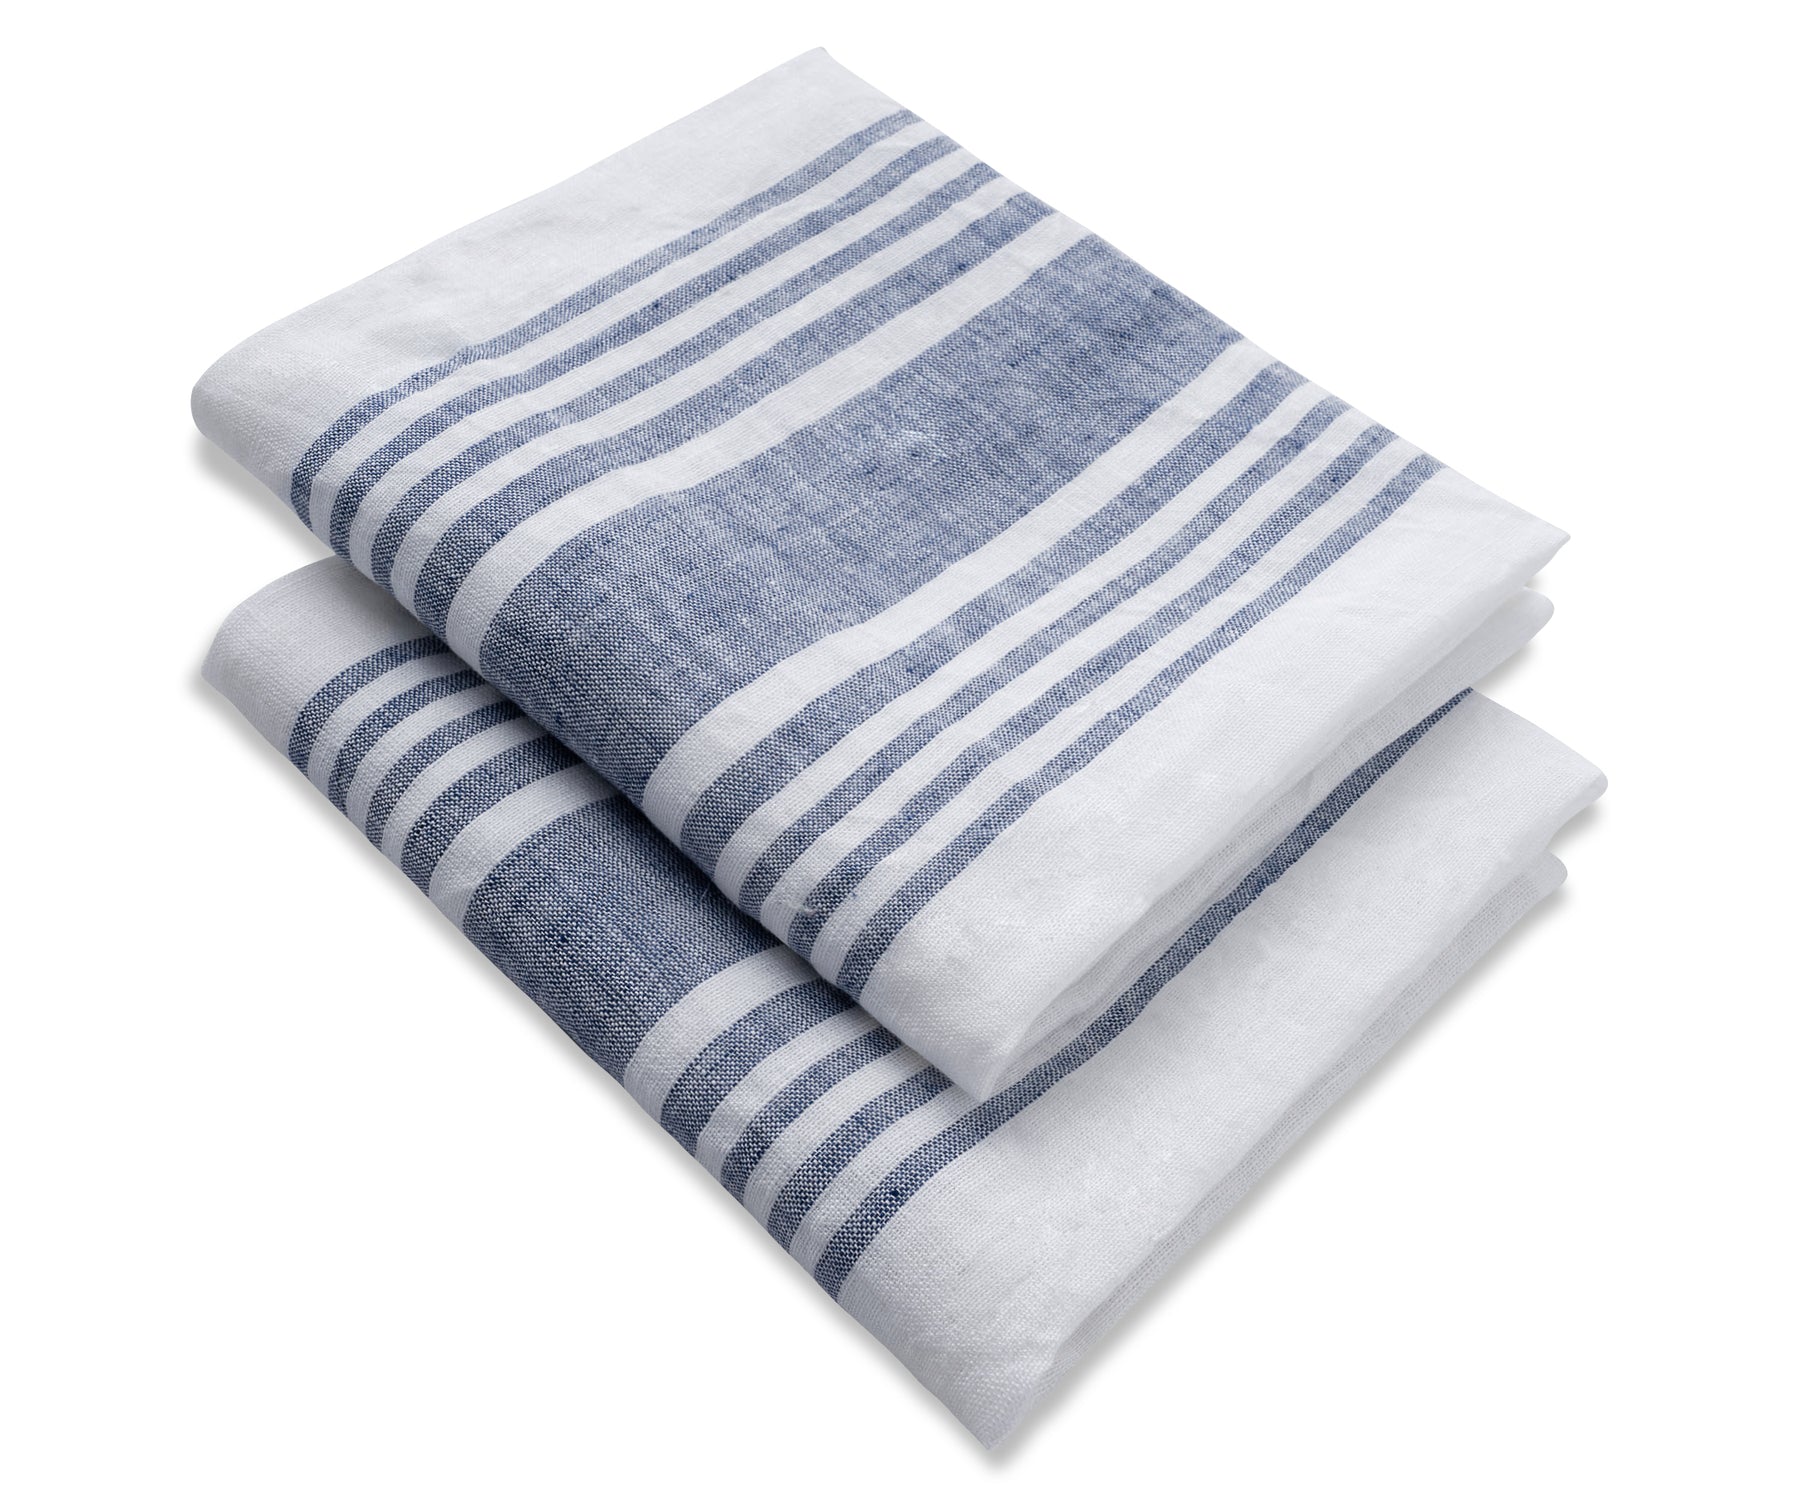 Linen kitchen towels: "Practical elegance for culinary tasks